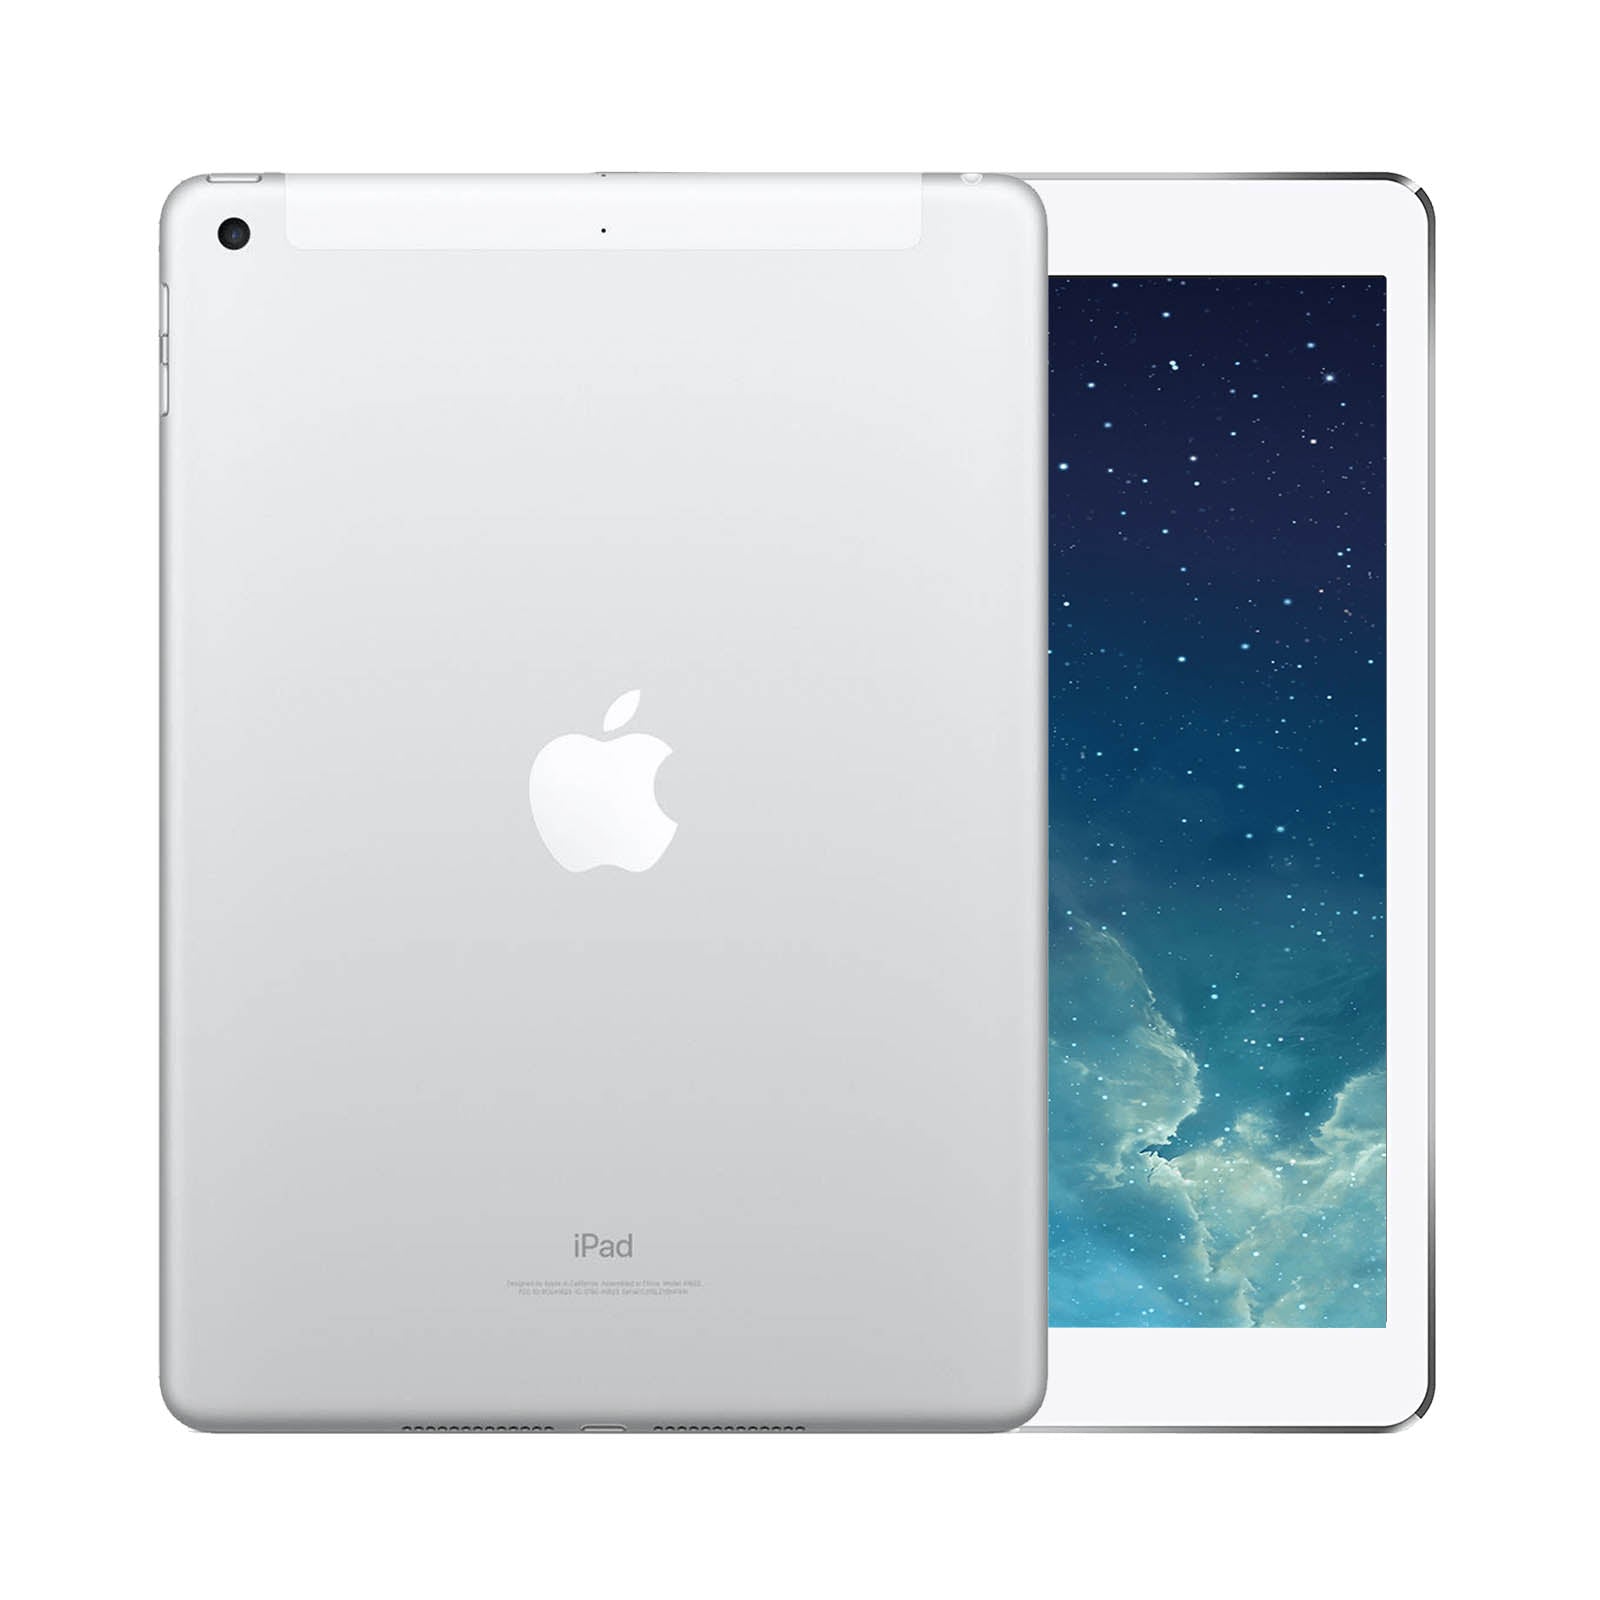 Apple iPad Air 64GB Silver Good - Unlocked